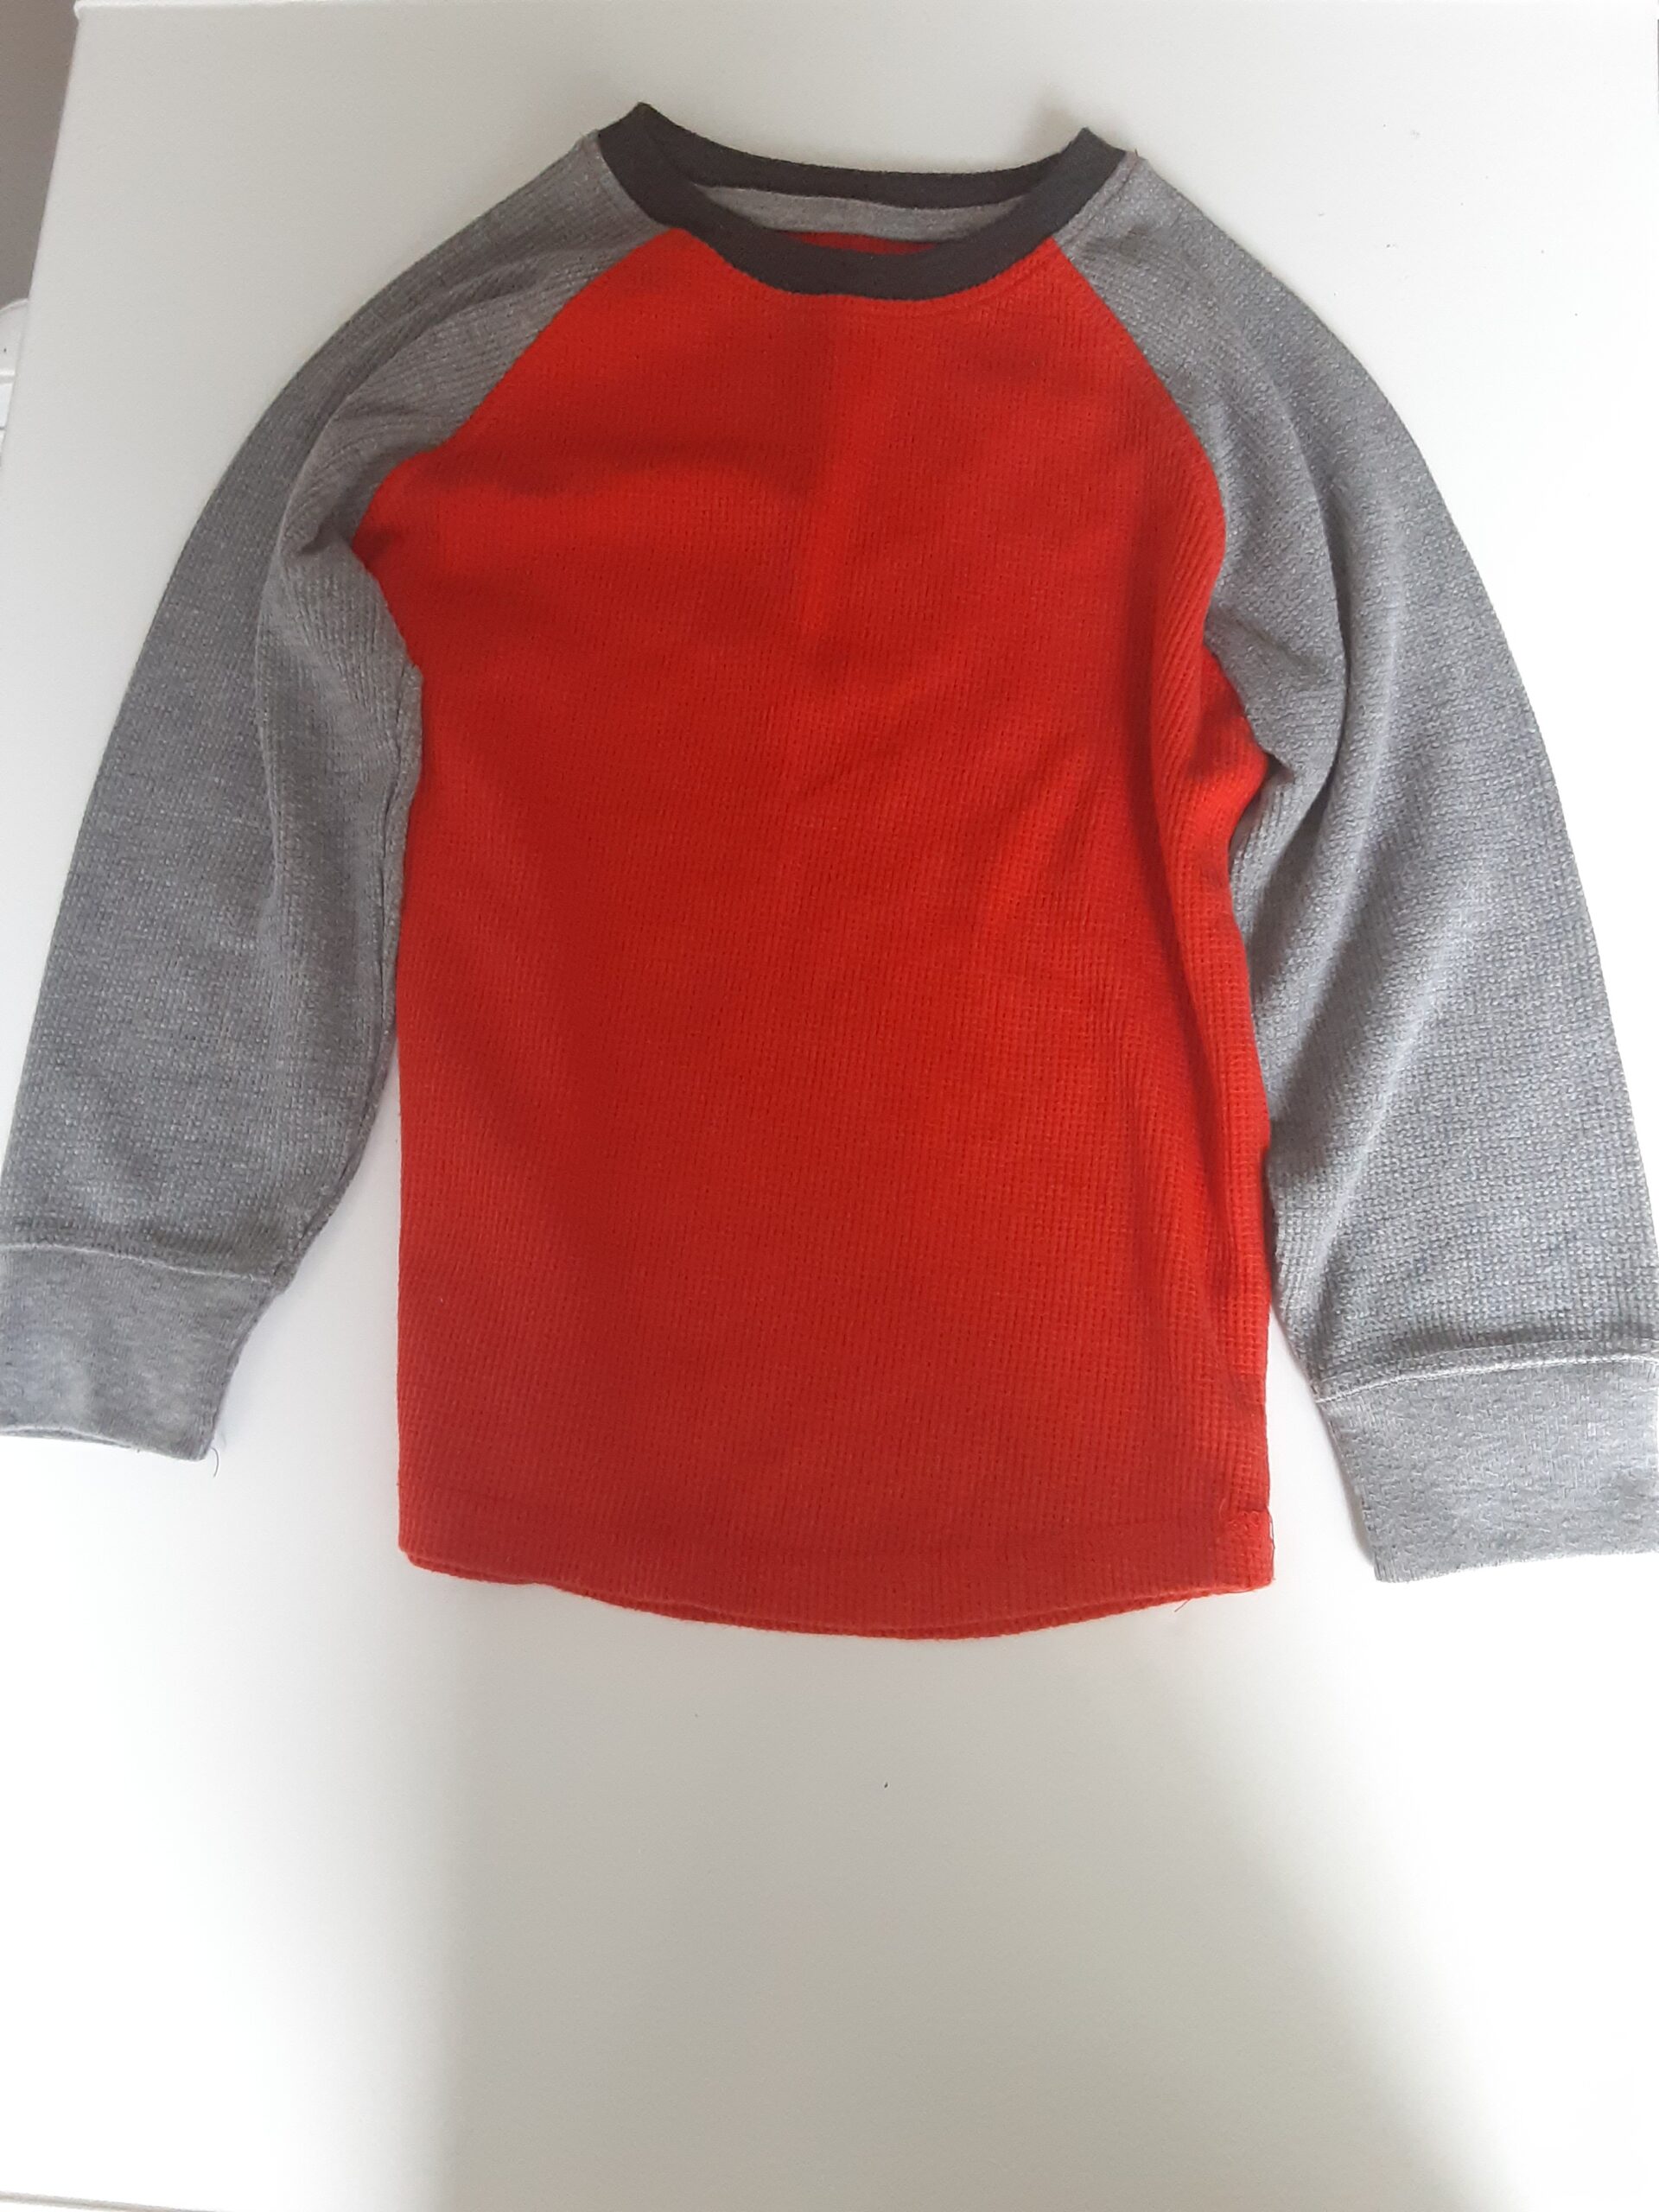 Long Sleeved thermal shirt red/grey